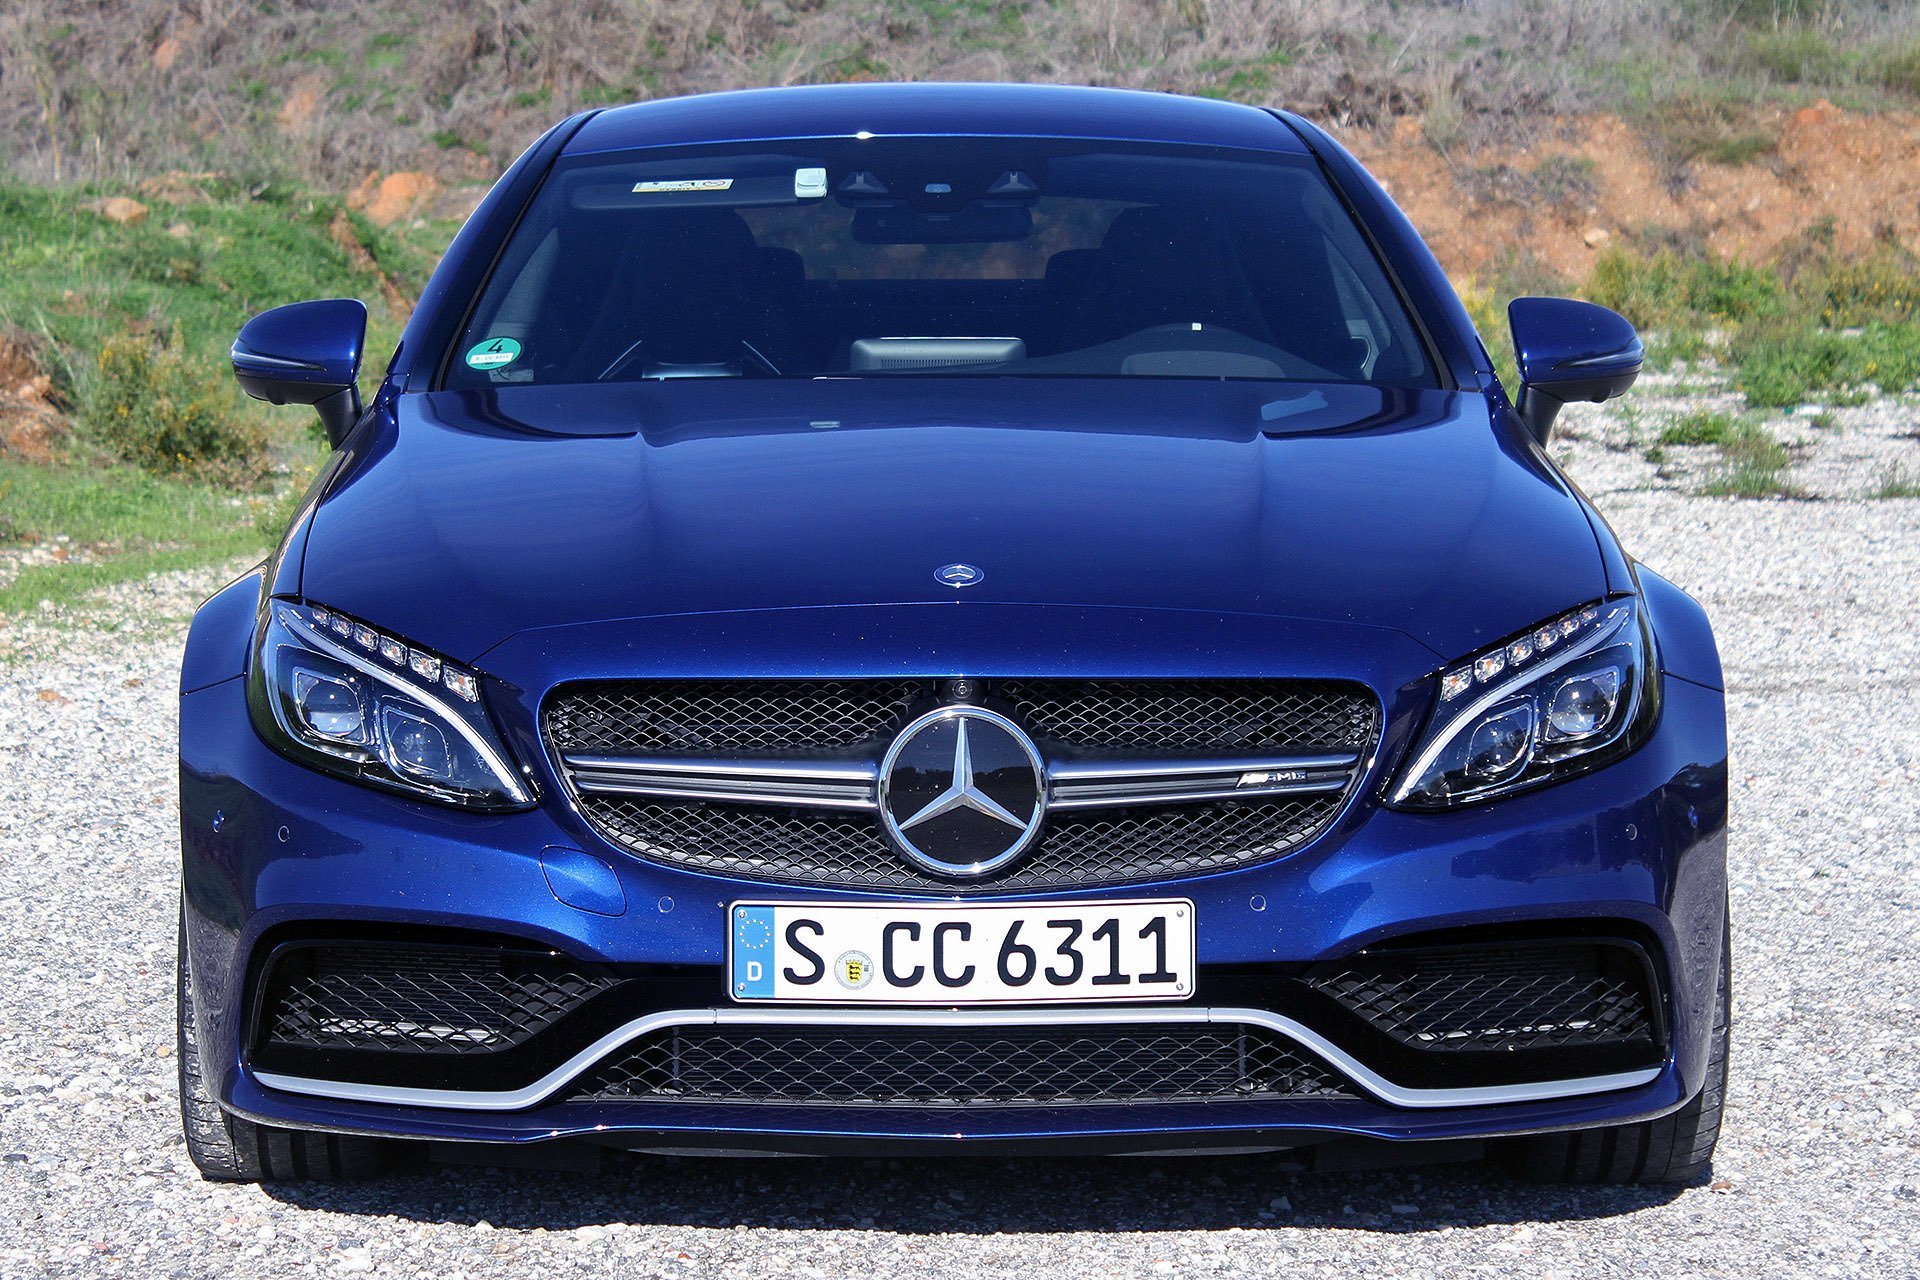 2016, Mercedes, Amg, C63 s, Coupe, Blue, 2015 Wallpaper